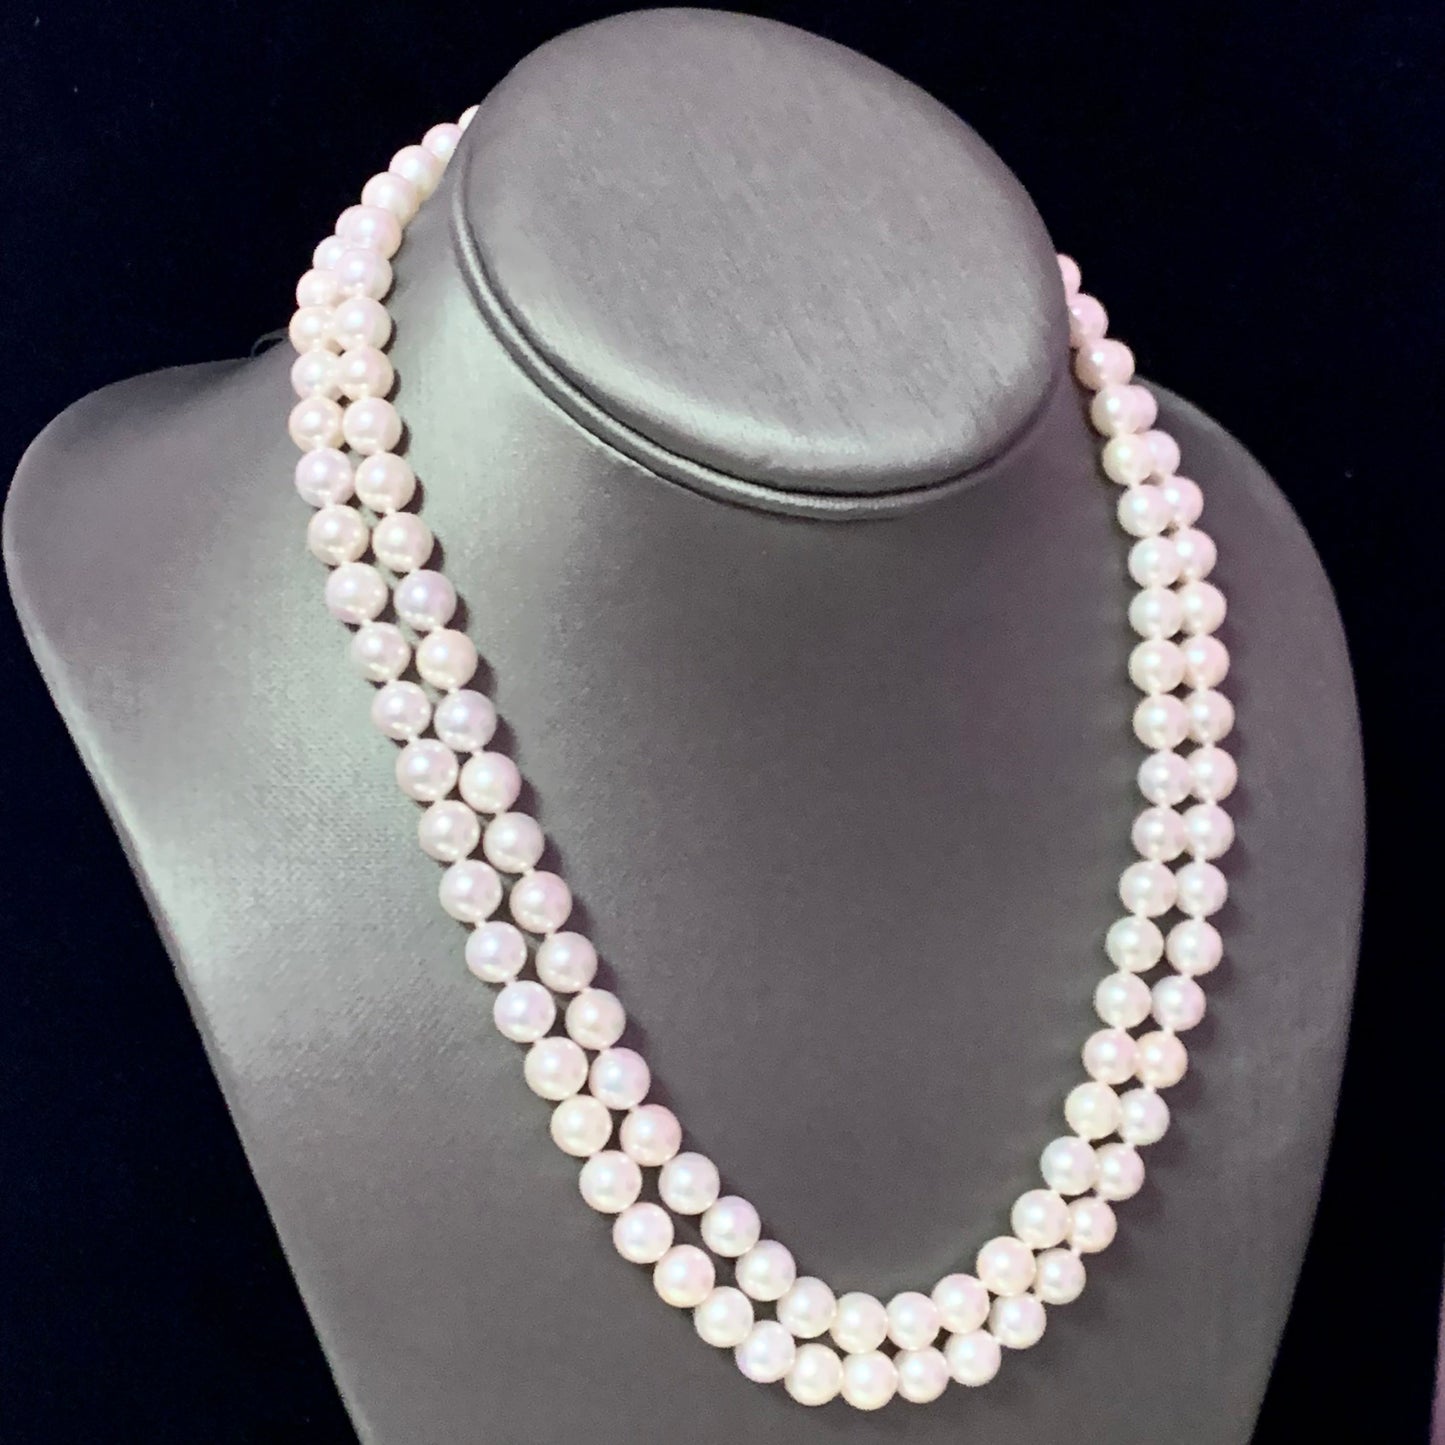 Diamond Akoya Pearl 2-Strand Necklace 14k Gold 18" 7.5mm Certified $9,750 116393 - Certified Estate Jewelry